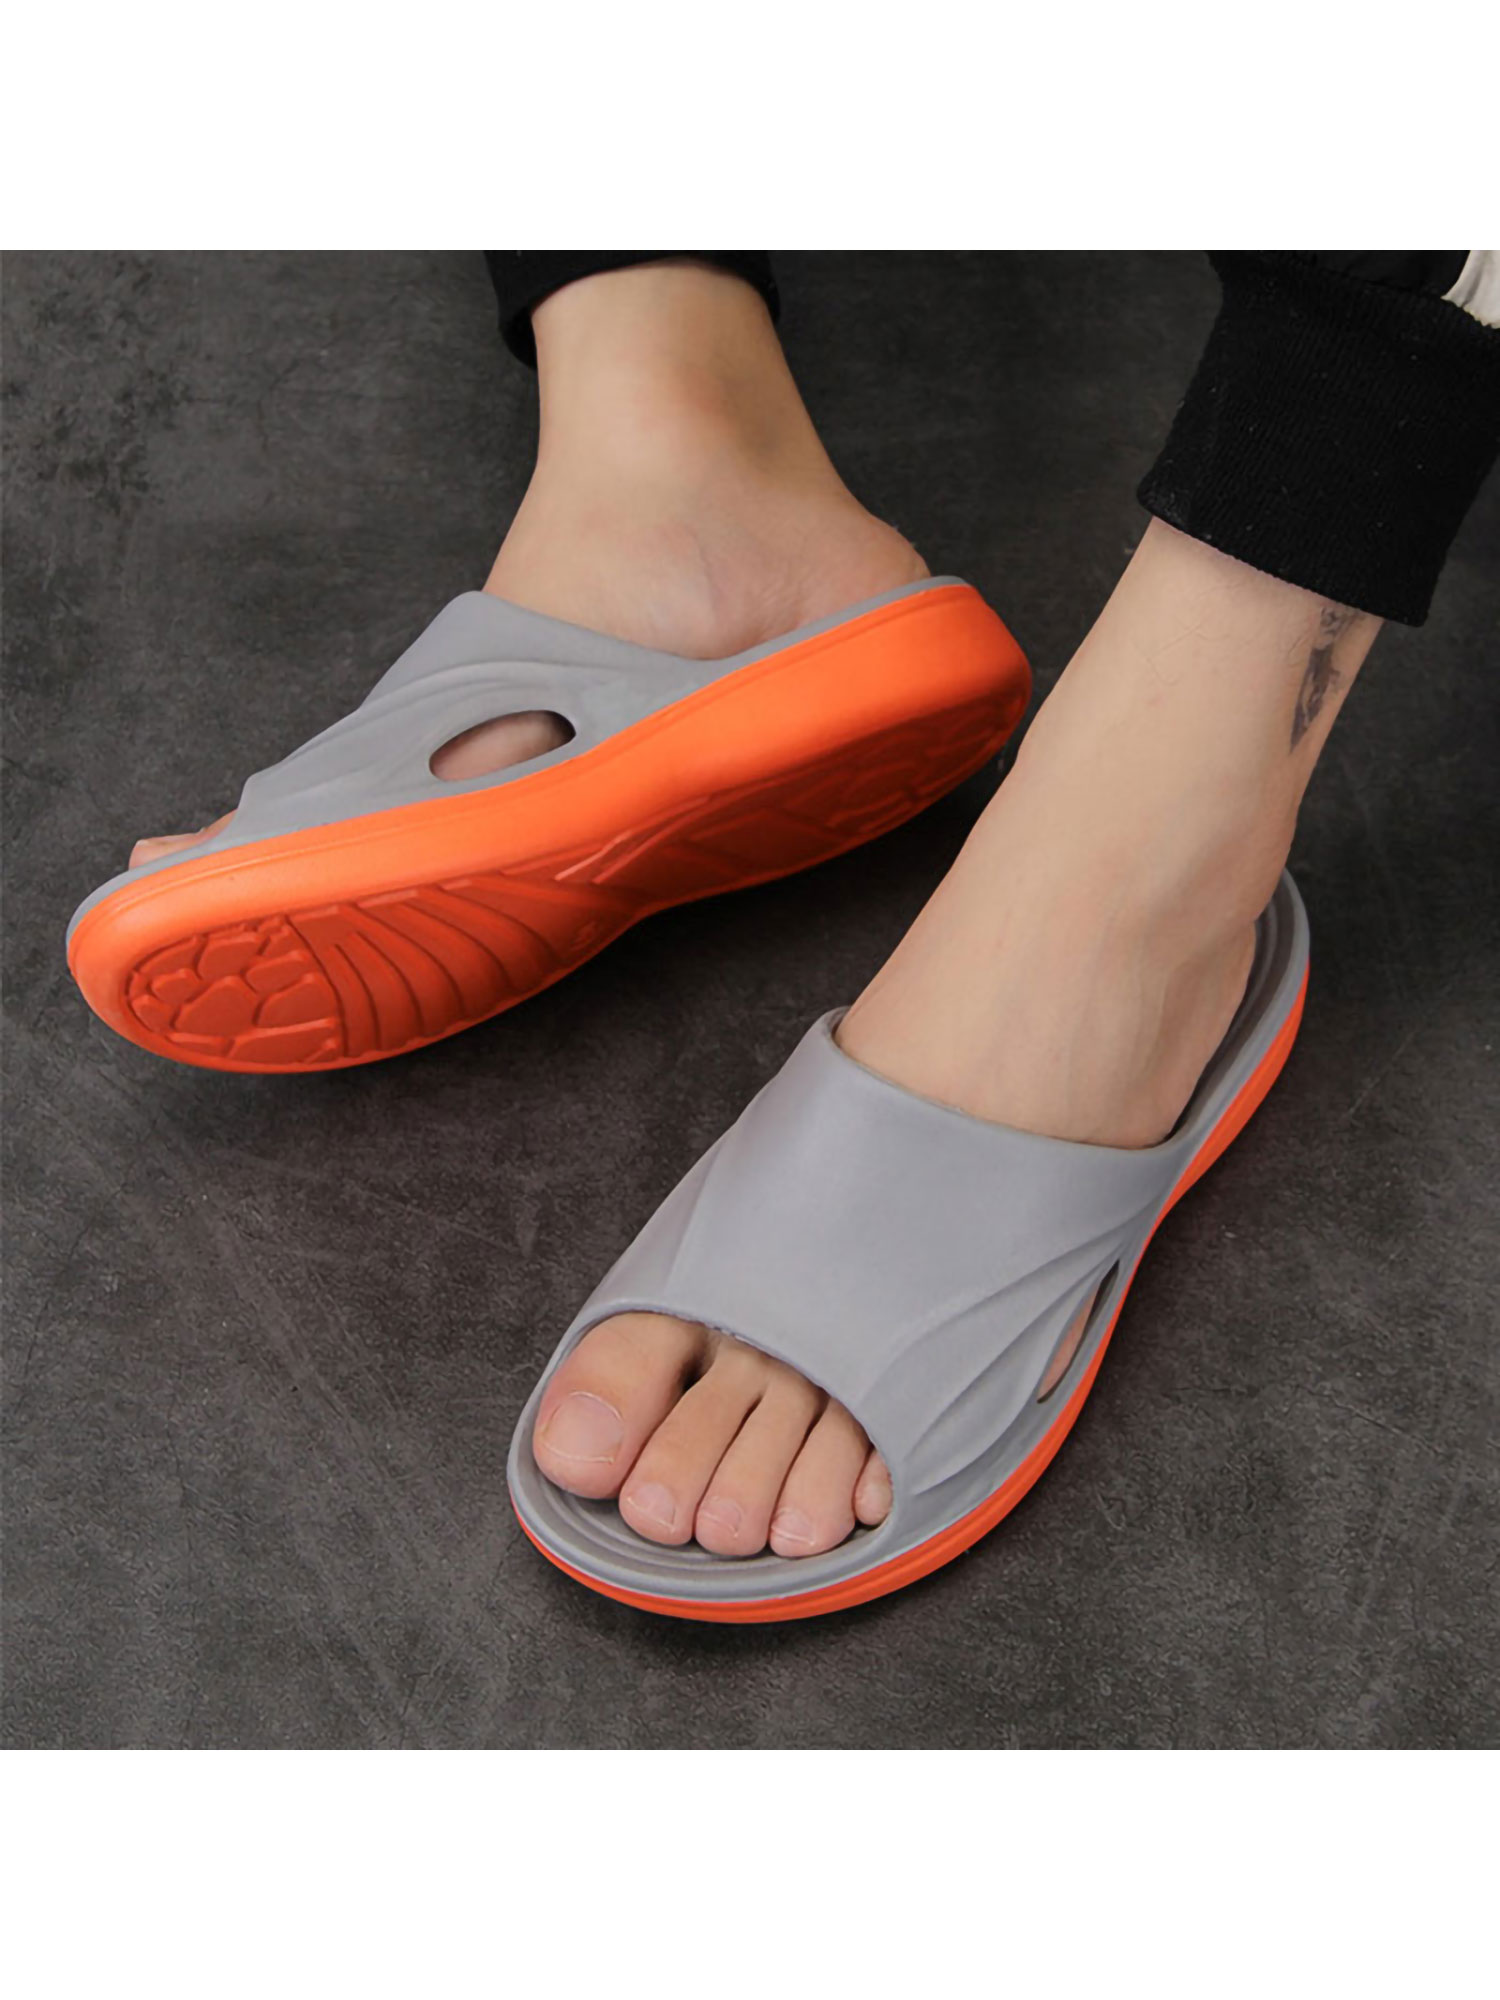 Men's Slip On Sport Slide Sandals Flip Flop Shower Shoes House Slippers  Bush